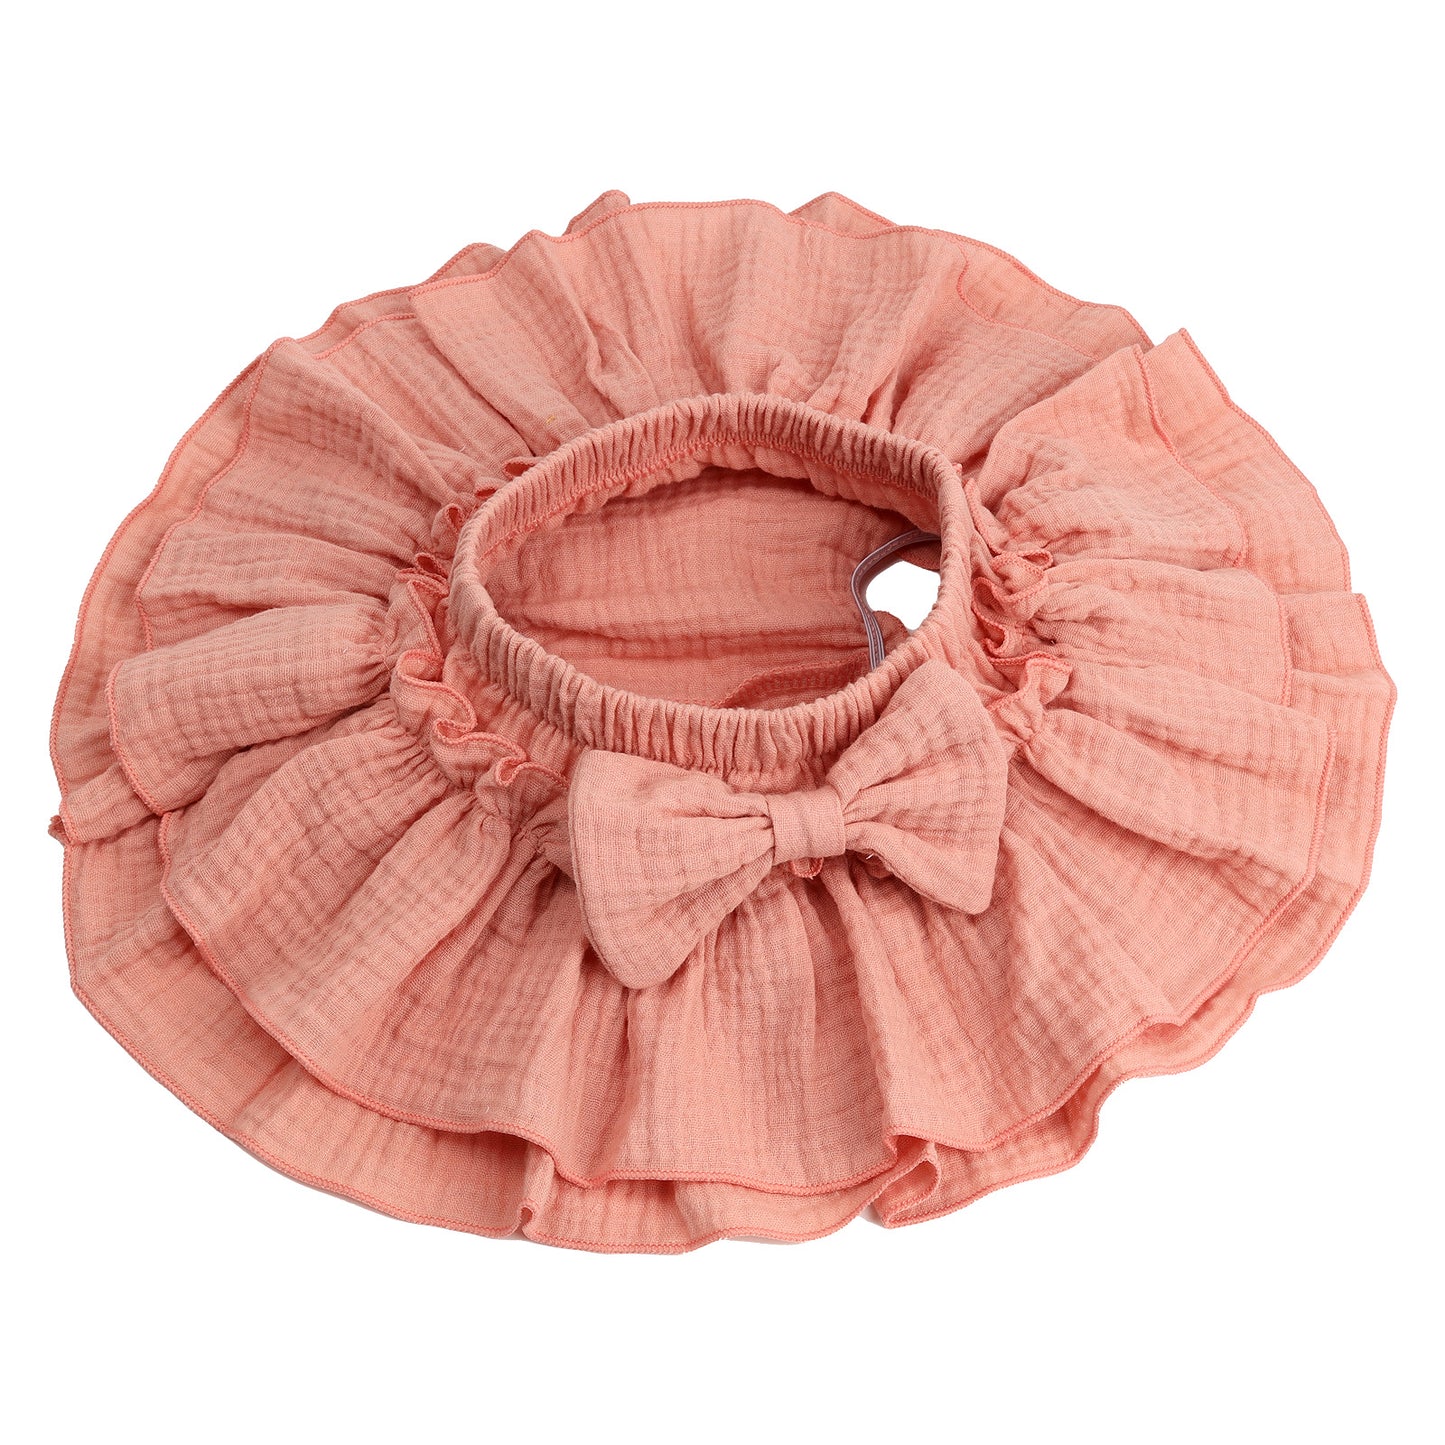 Baby Girls Soft Cotton Gauze Ruffle Skirt with Shorts